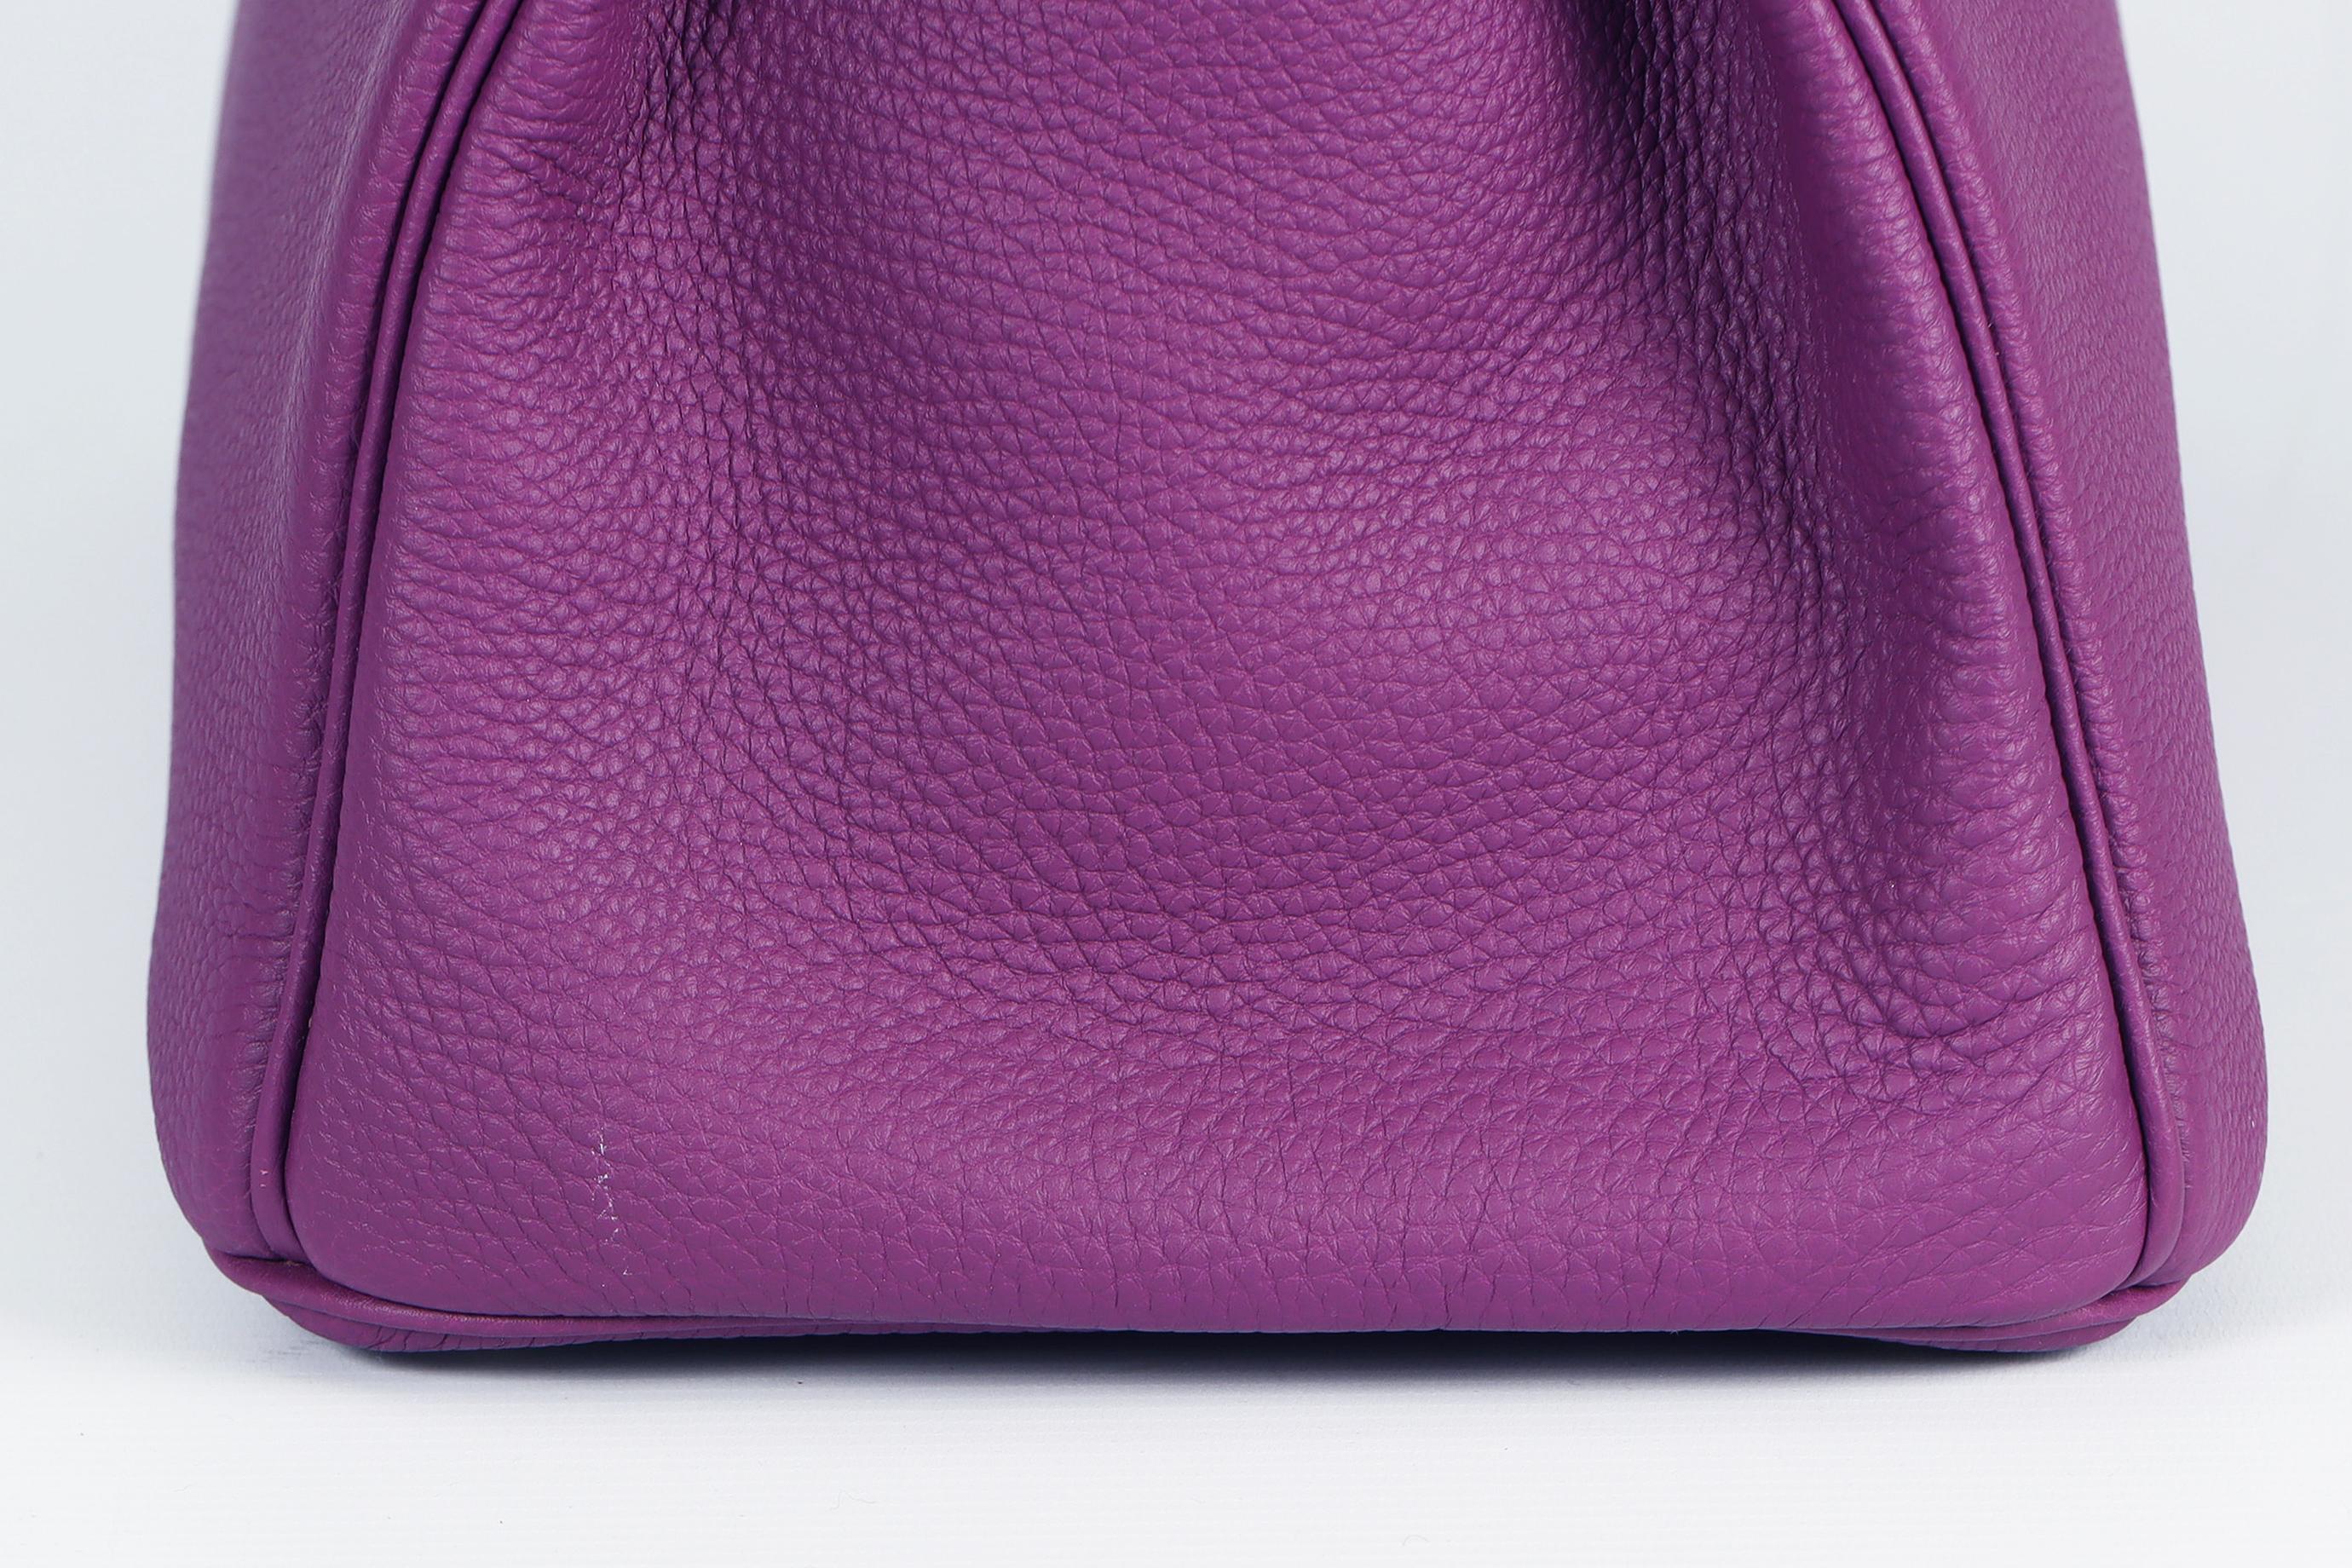 Hermès 2014 Birkin 35cm Togo Leather Bag For Sale 10